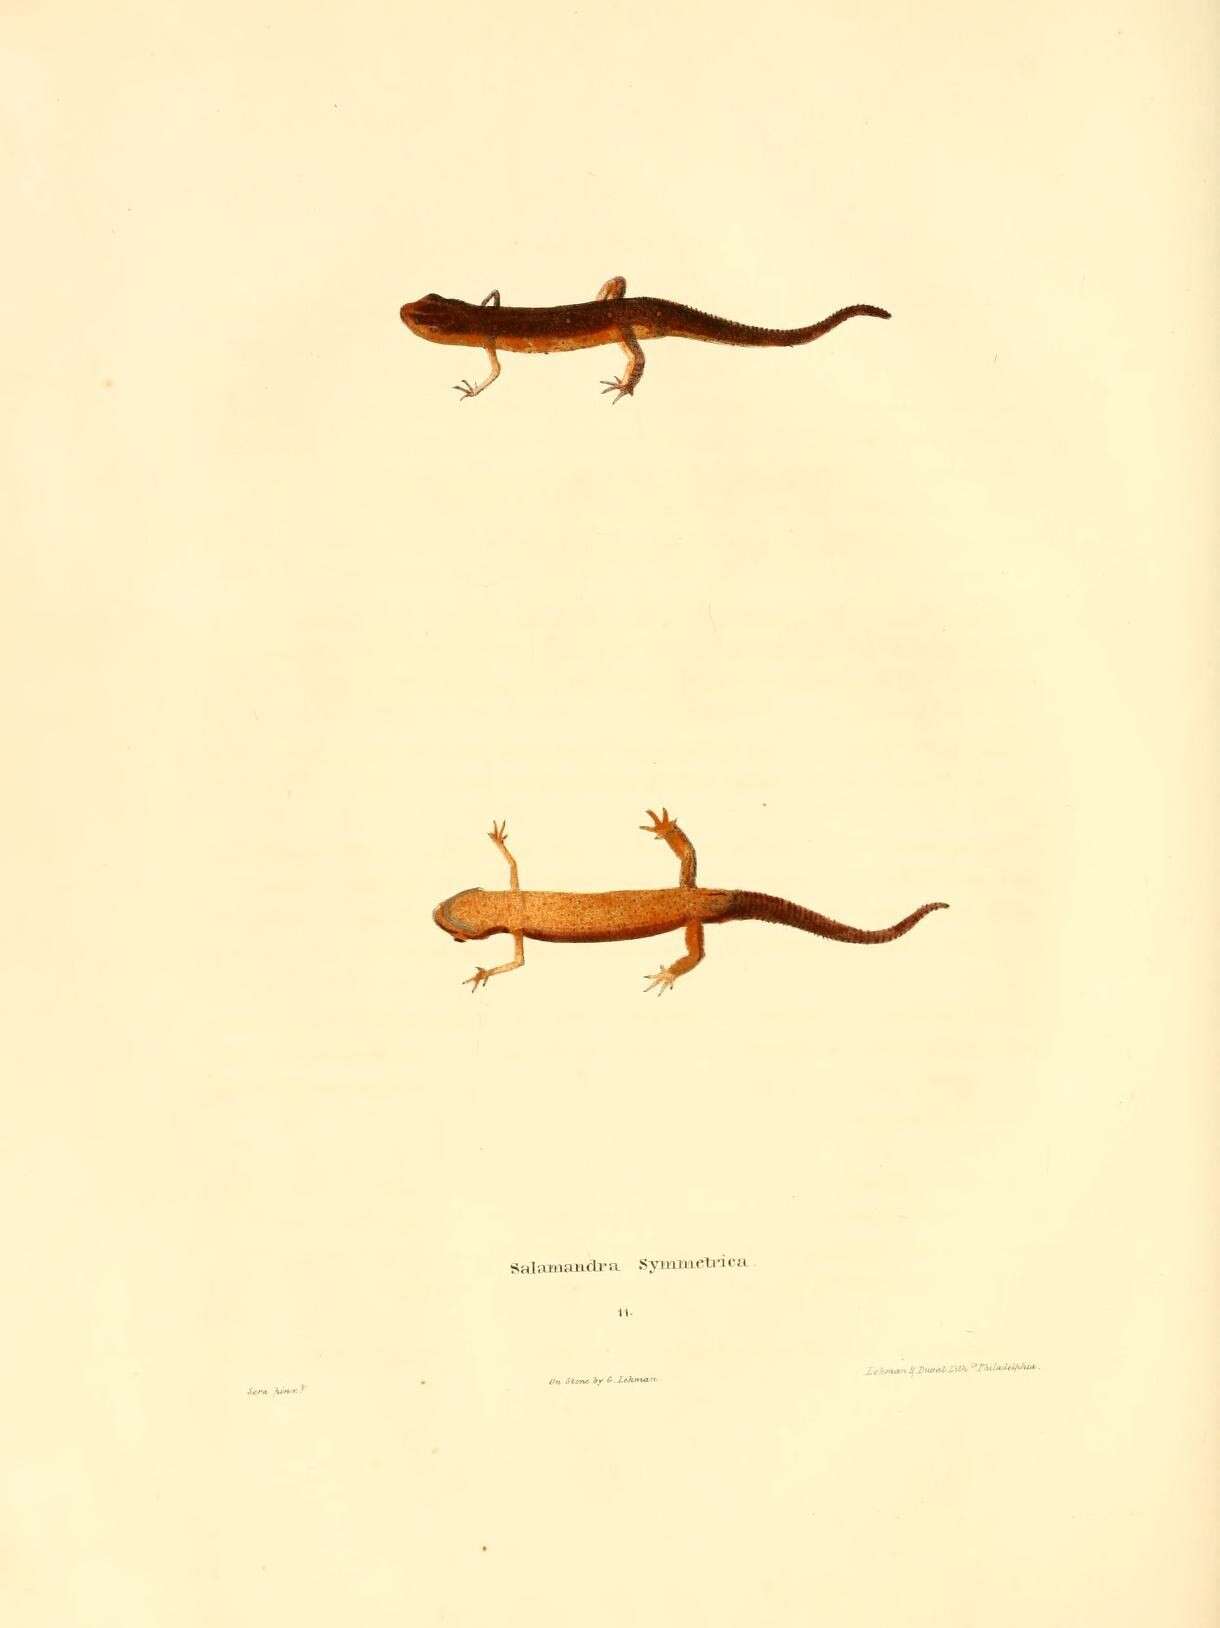 Image of Salamandra symmetrica